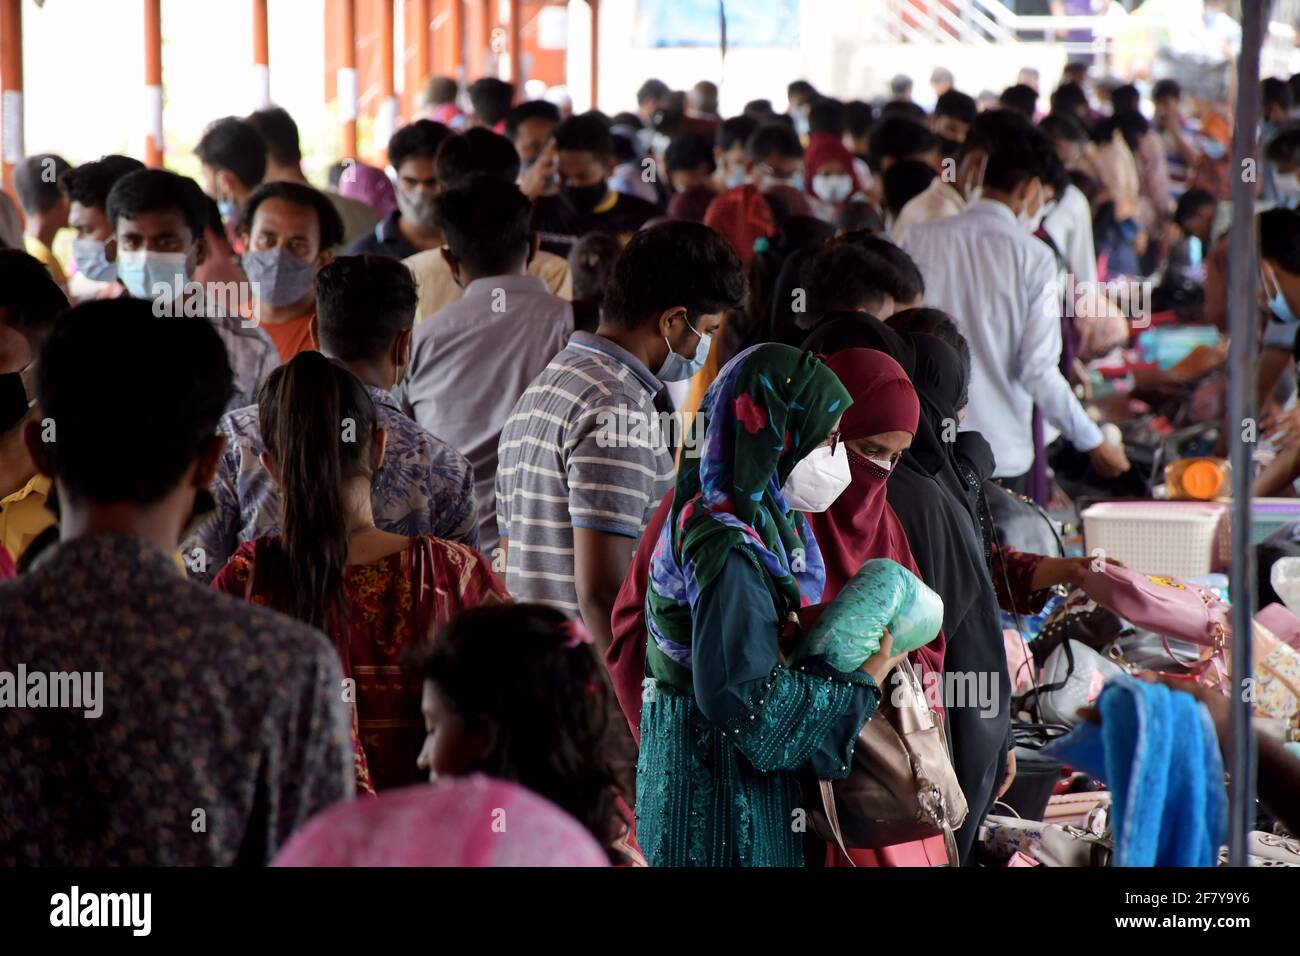 DHAKA, BANGLADESH - APRIL 10: People gather at Dhaka New market for shopping as they not maintaining any kind of social distance in Dhaka, Bangladesh on April 10, 2021. Credit: Alamy/Alamy Live News Stock Photo